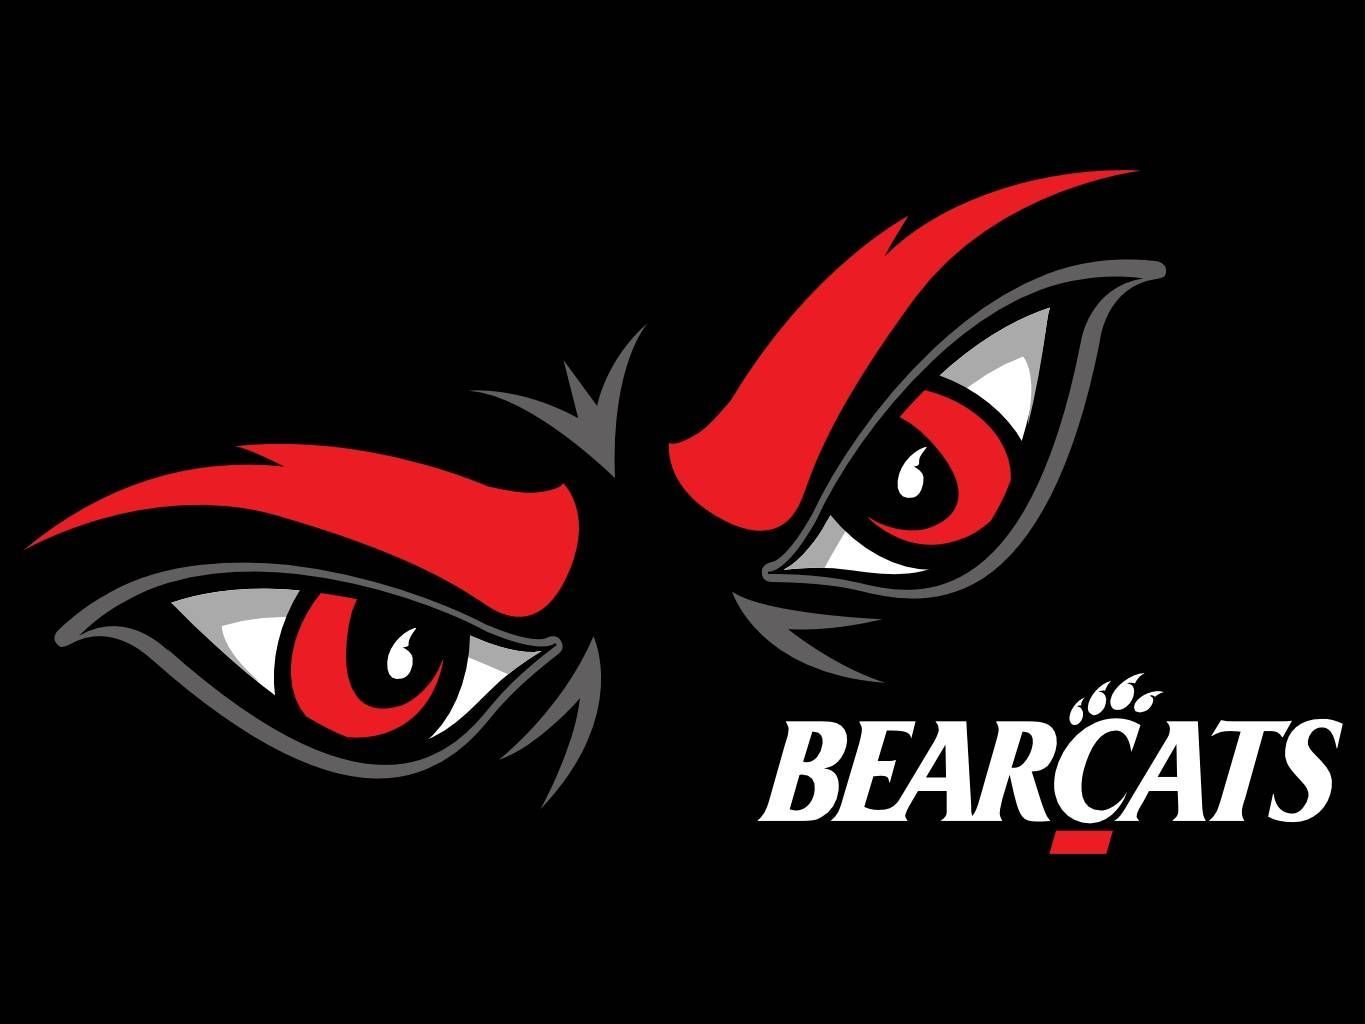 University of Cincinnati Bearcats ideas. cincinnati bearcats, university of cincinnati, bearcats